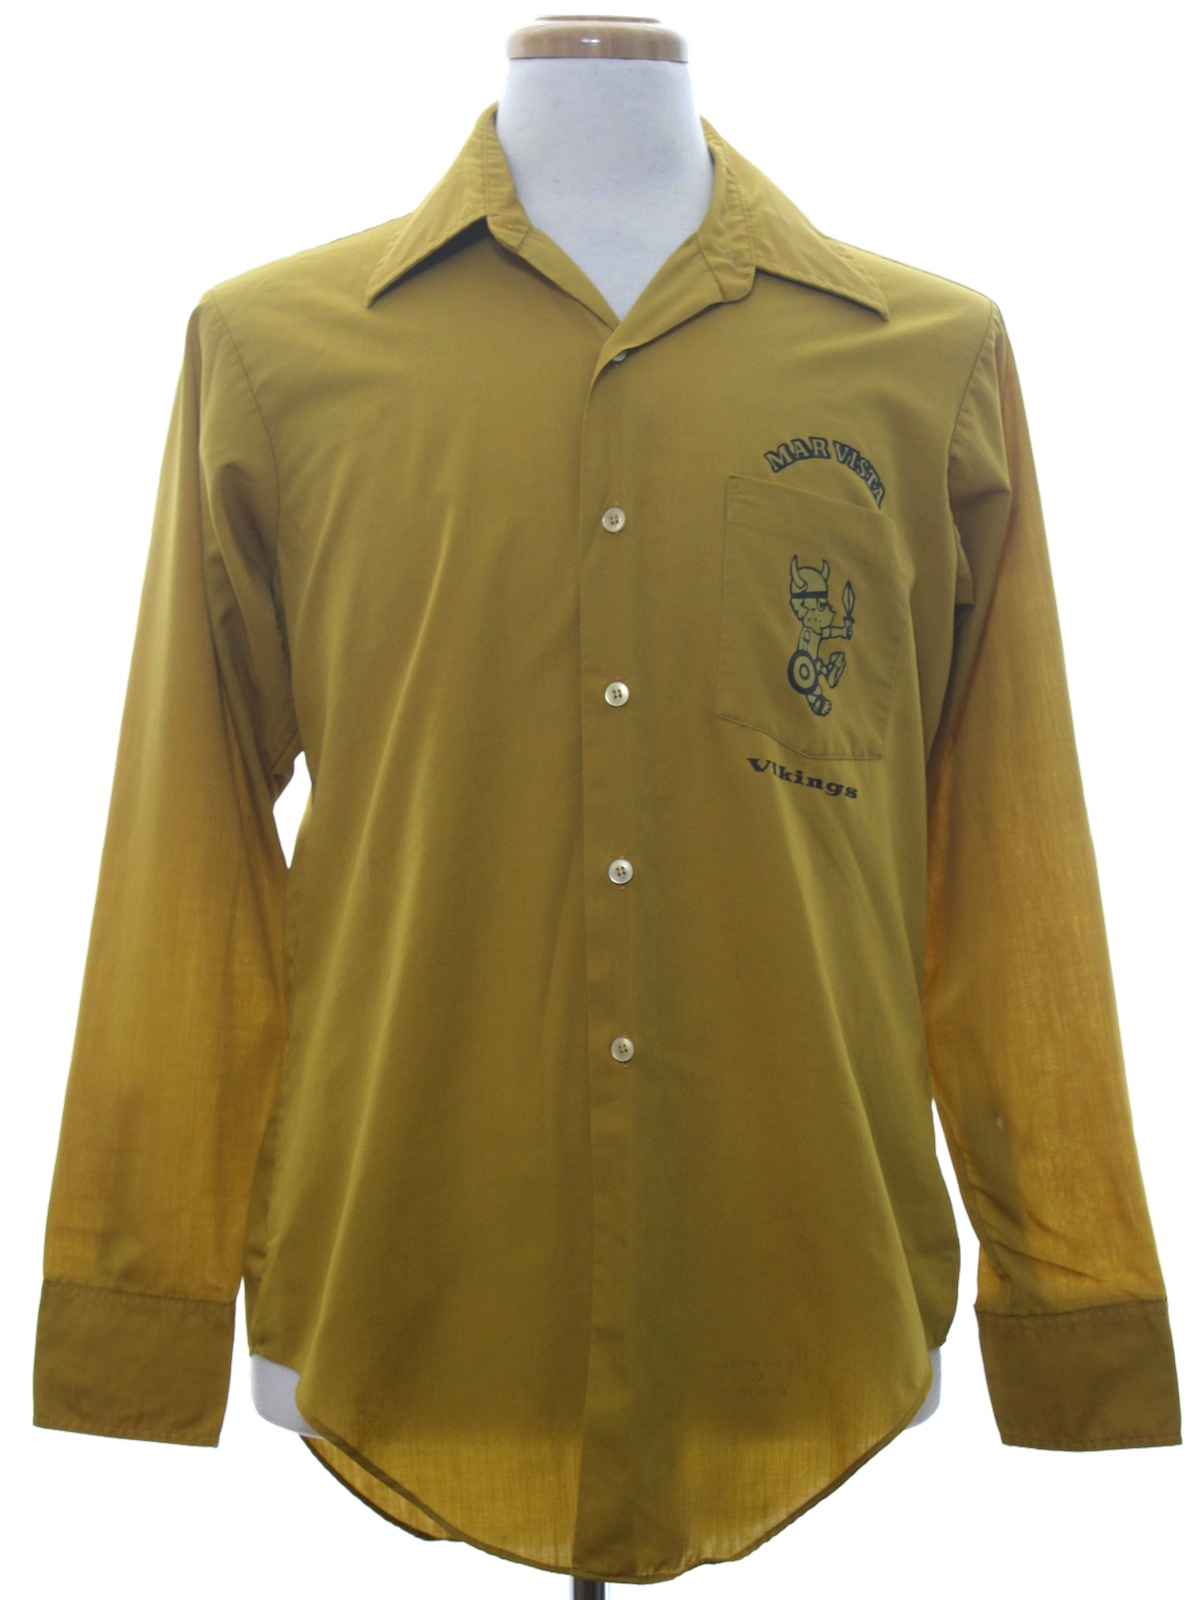 Retro 70s Shirt (Beeline Fashions) : 70s -Beeline Fashions- Mens dark ...